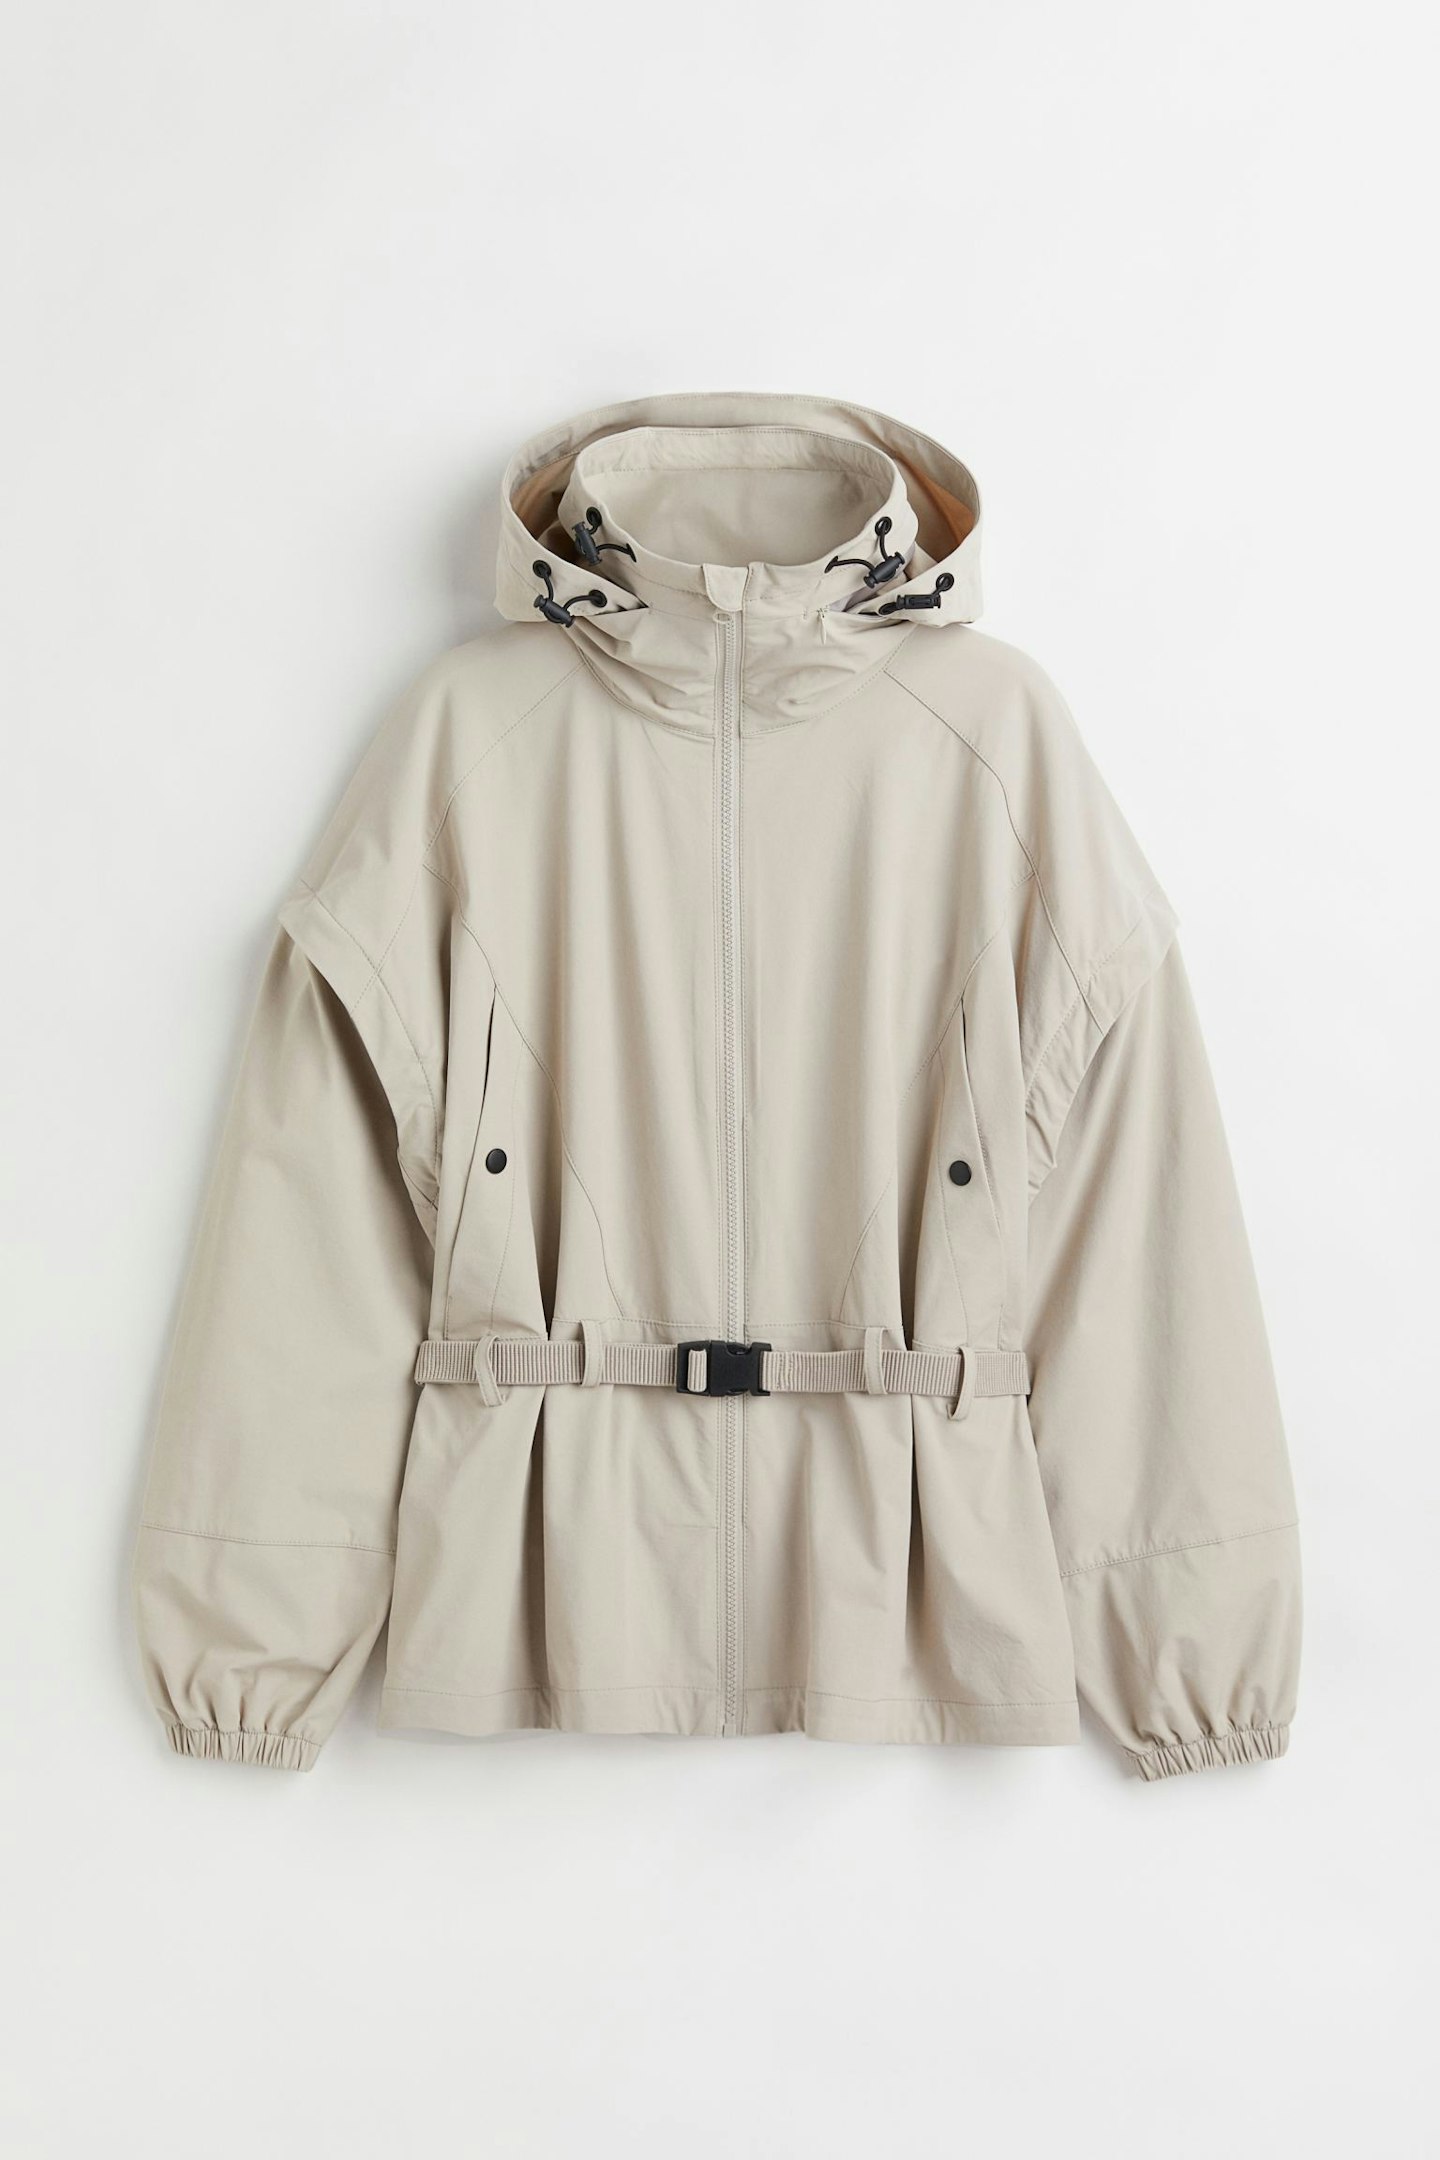 rain bad weather fashion H&M, Detachable Sleeve Jacket, £59.99